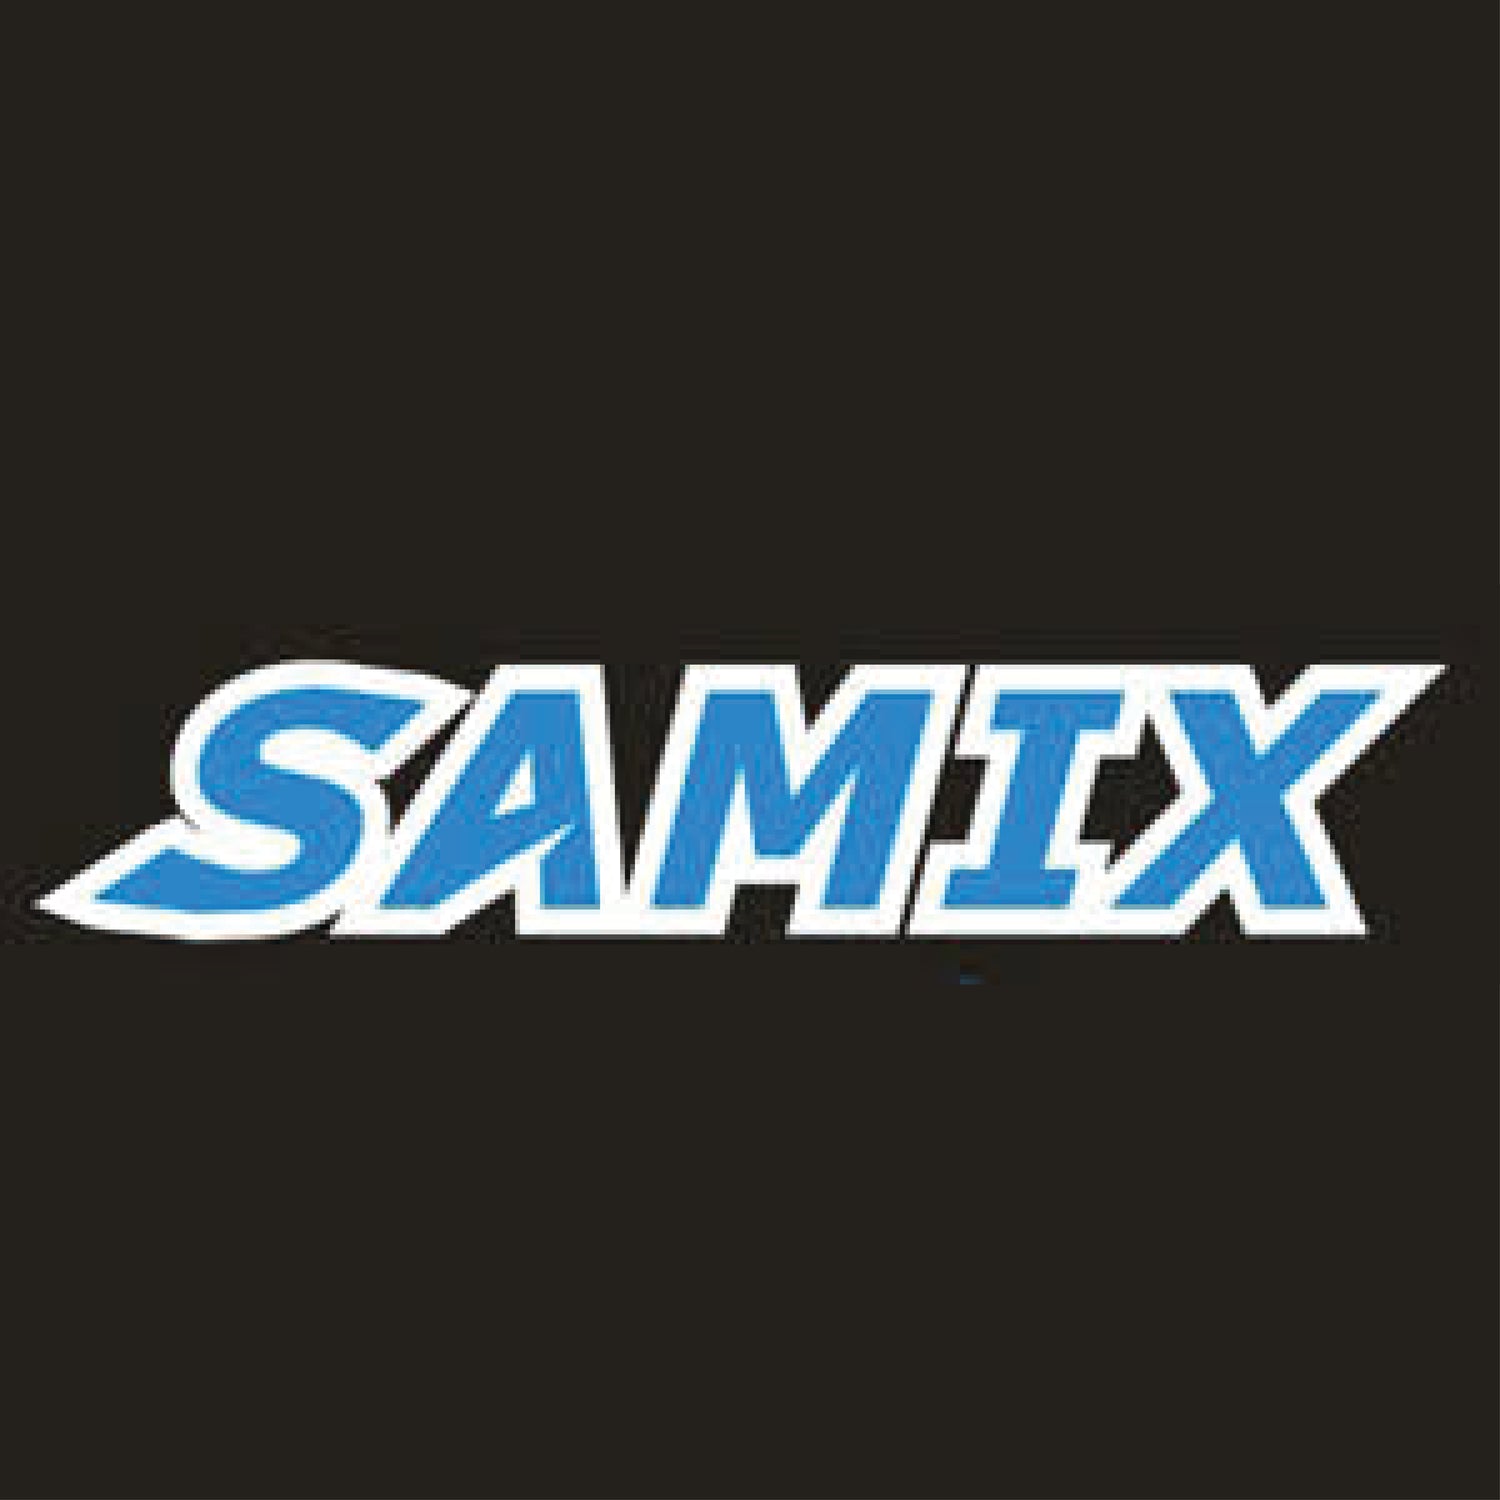 Samix